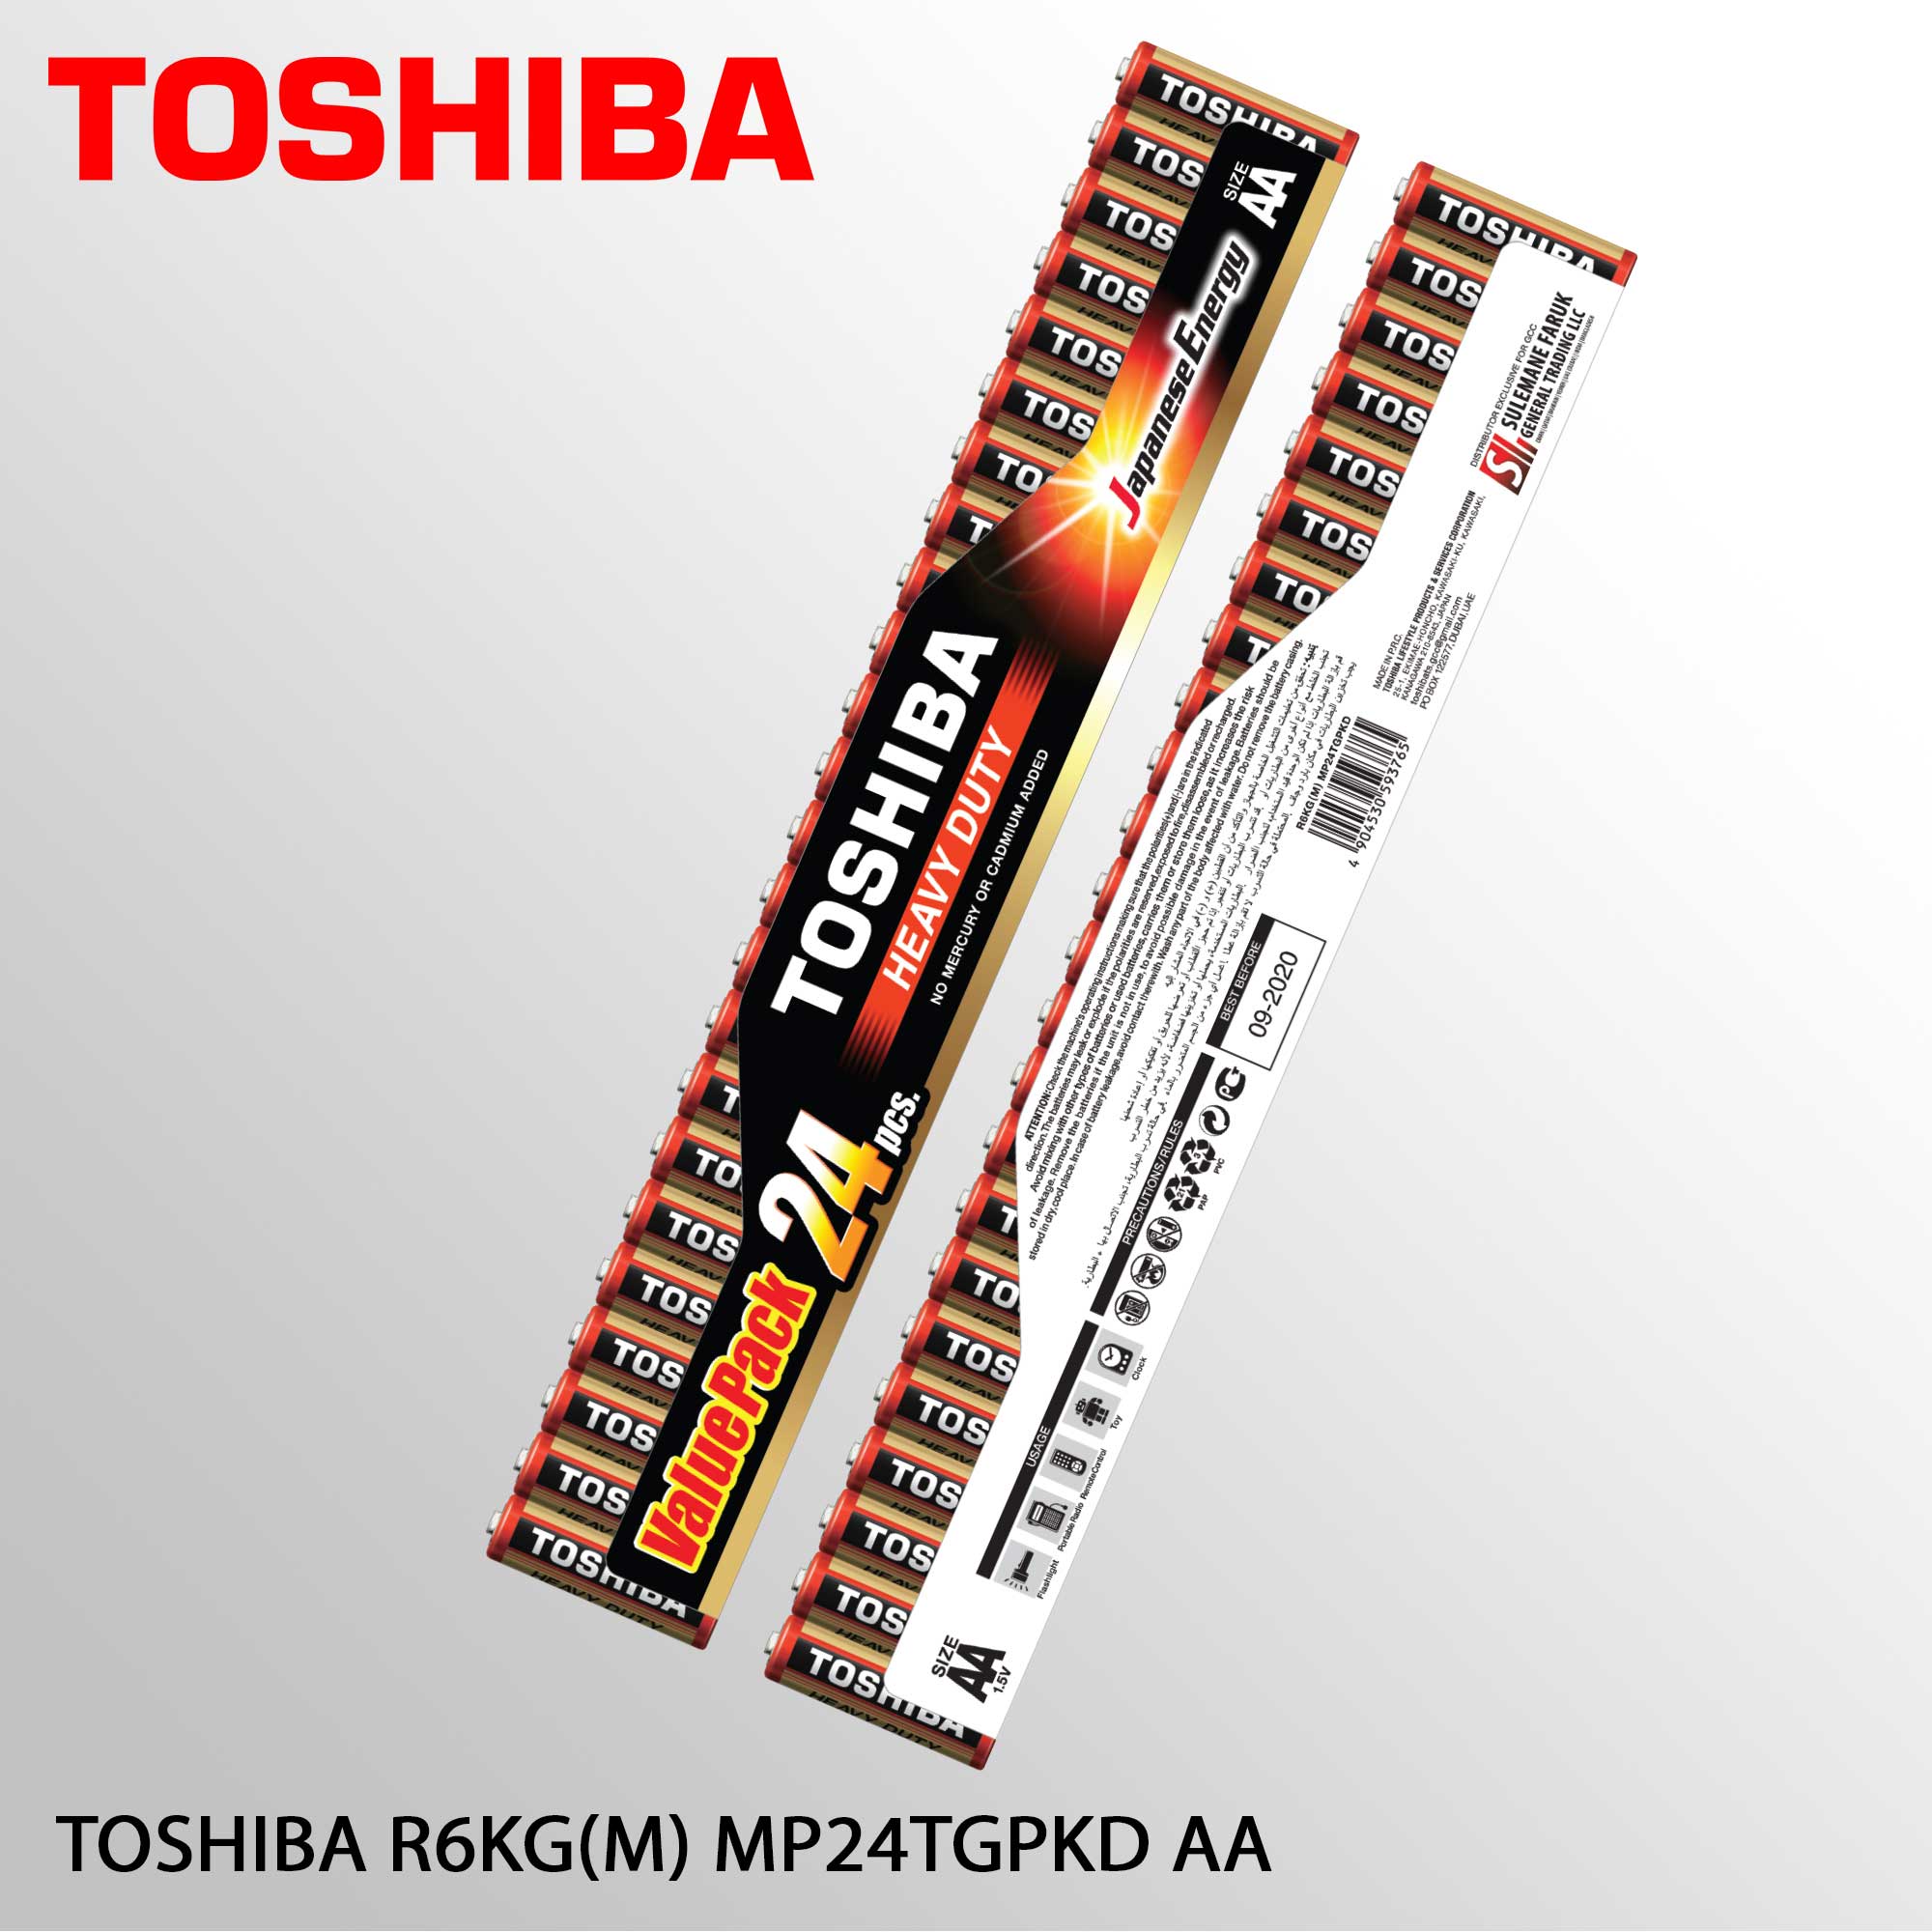 TOSHIBA R6KG(M) MP24TGPKD AA